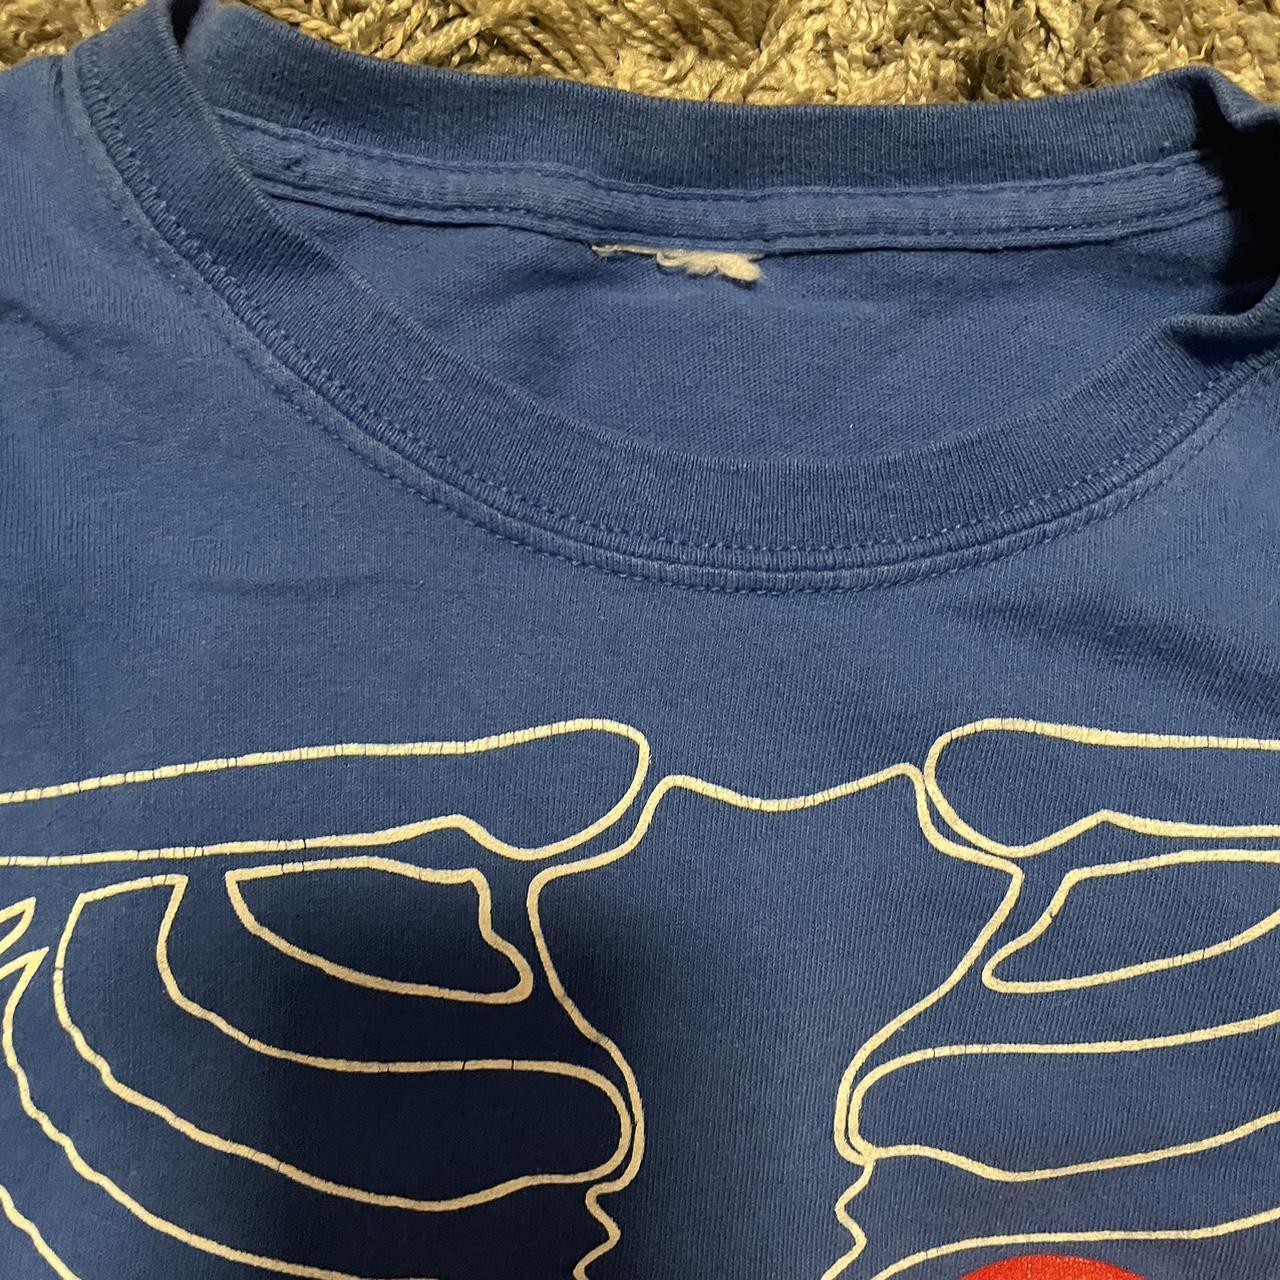 Nike Dri-Fit MLB Chicago Cubs Graphic T-Shirt Men - Depop